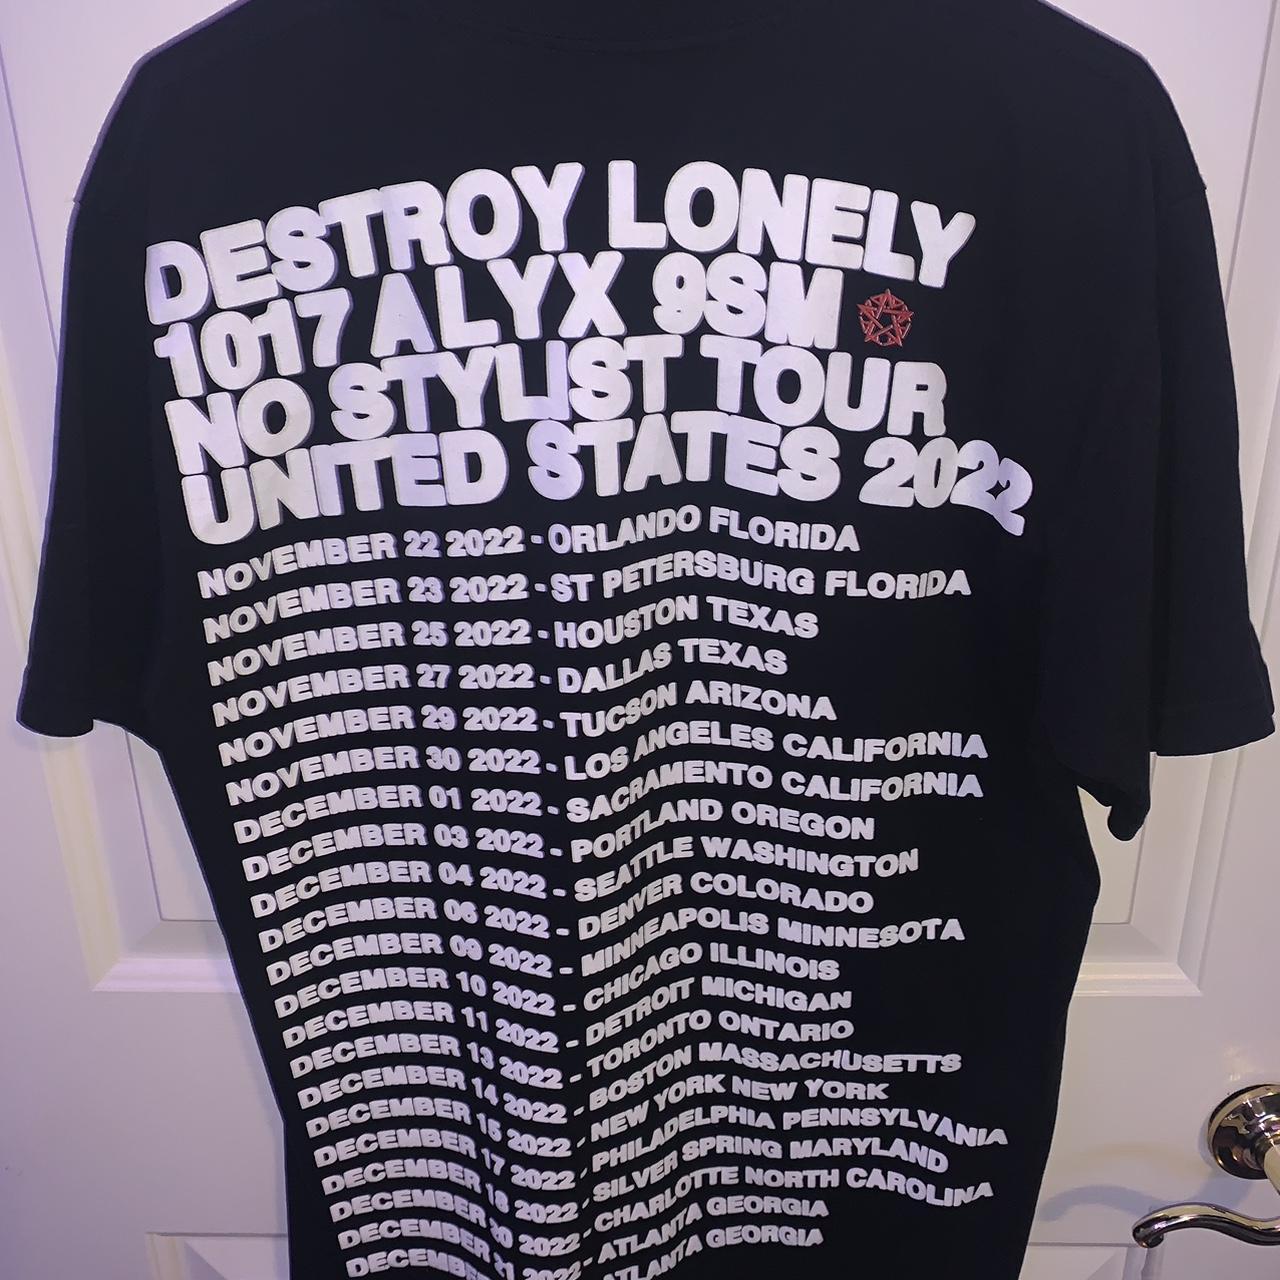 Destroy Lonely 1017 Alyx Tour Merch Collab I got... - Depop